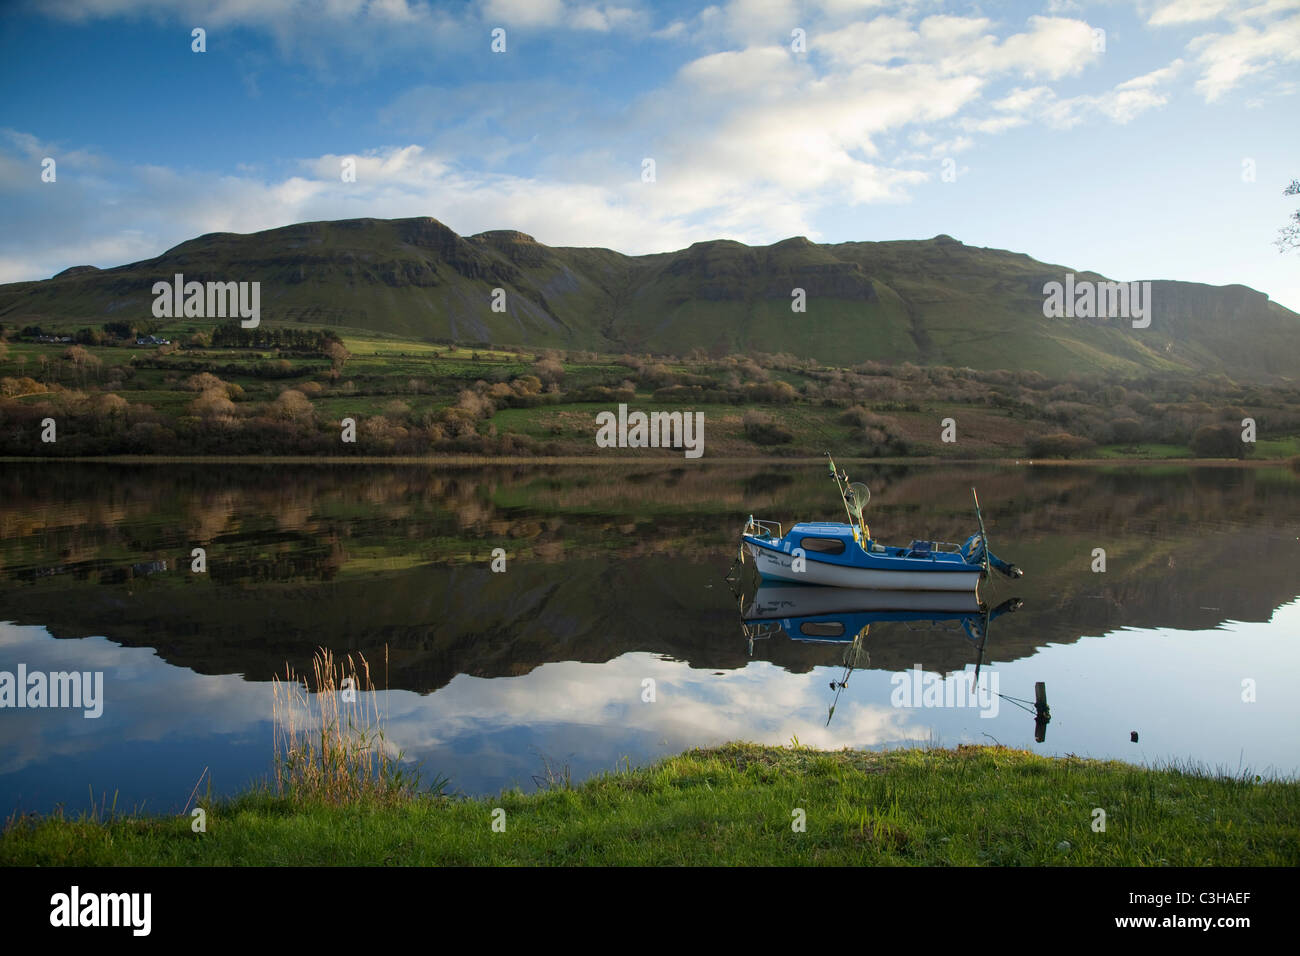 Mountain reflection and fishing boat in Glencar Lough, County Sligo, Ireland. Stock Photo